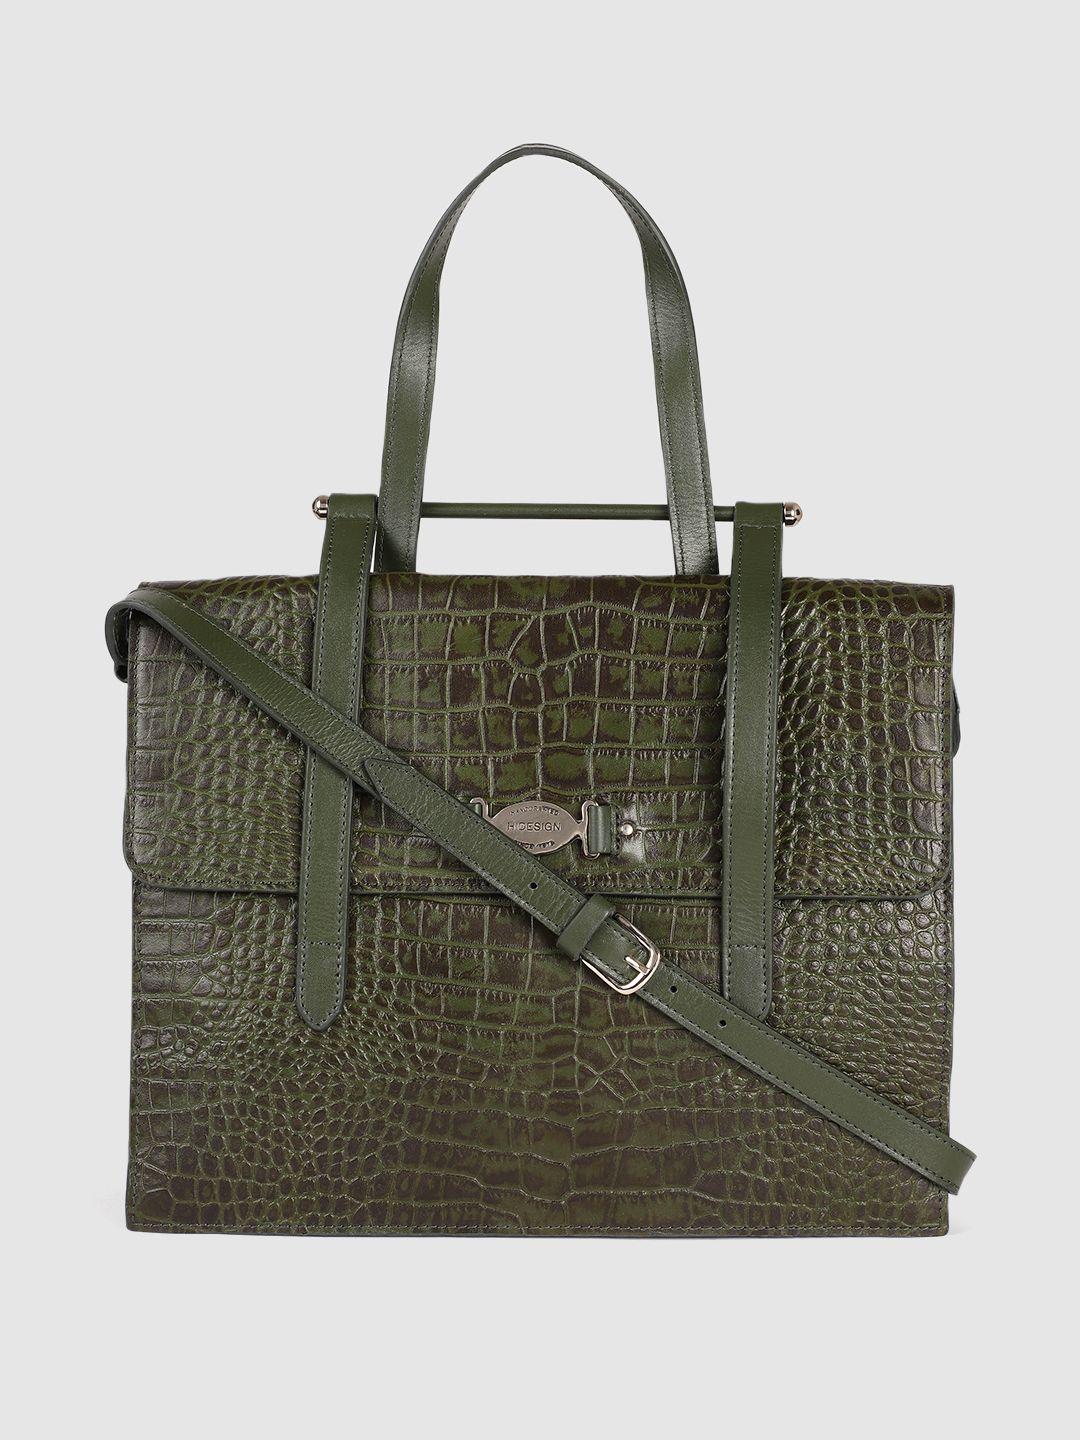 hidesign olive green animal textured leather structured handheld bag